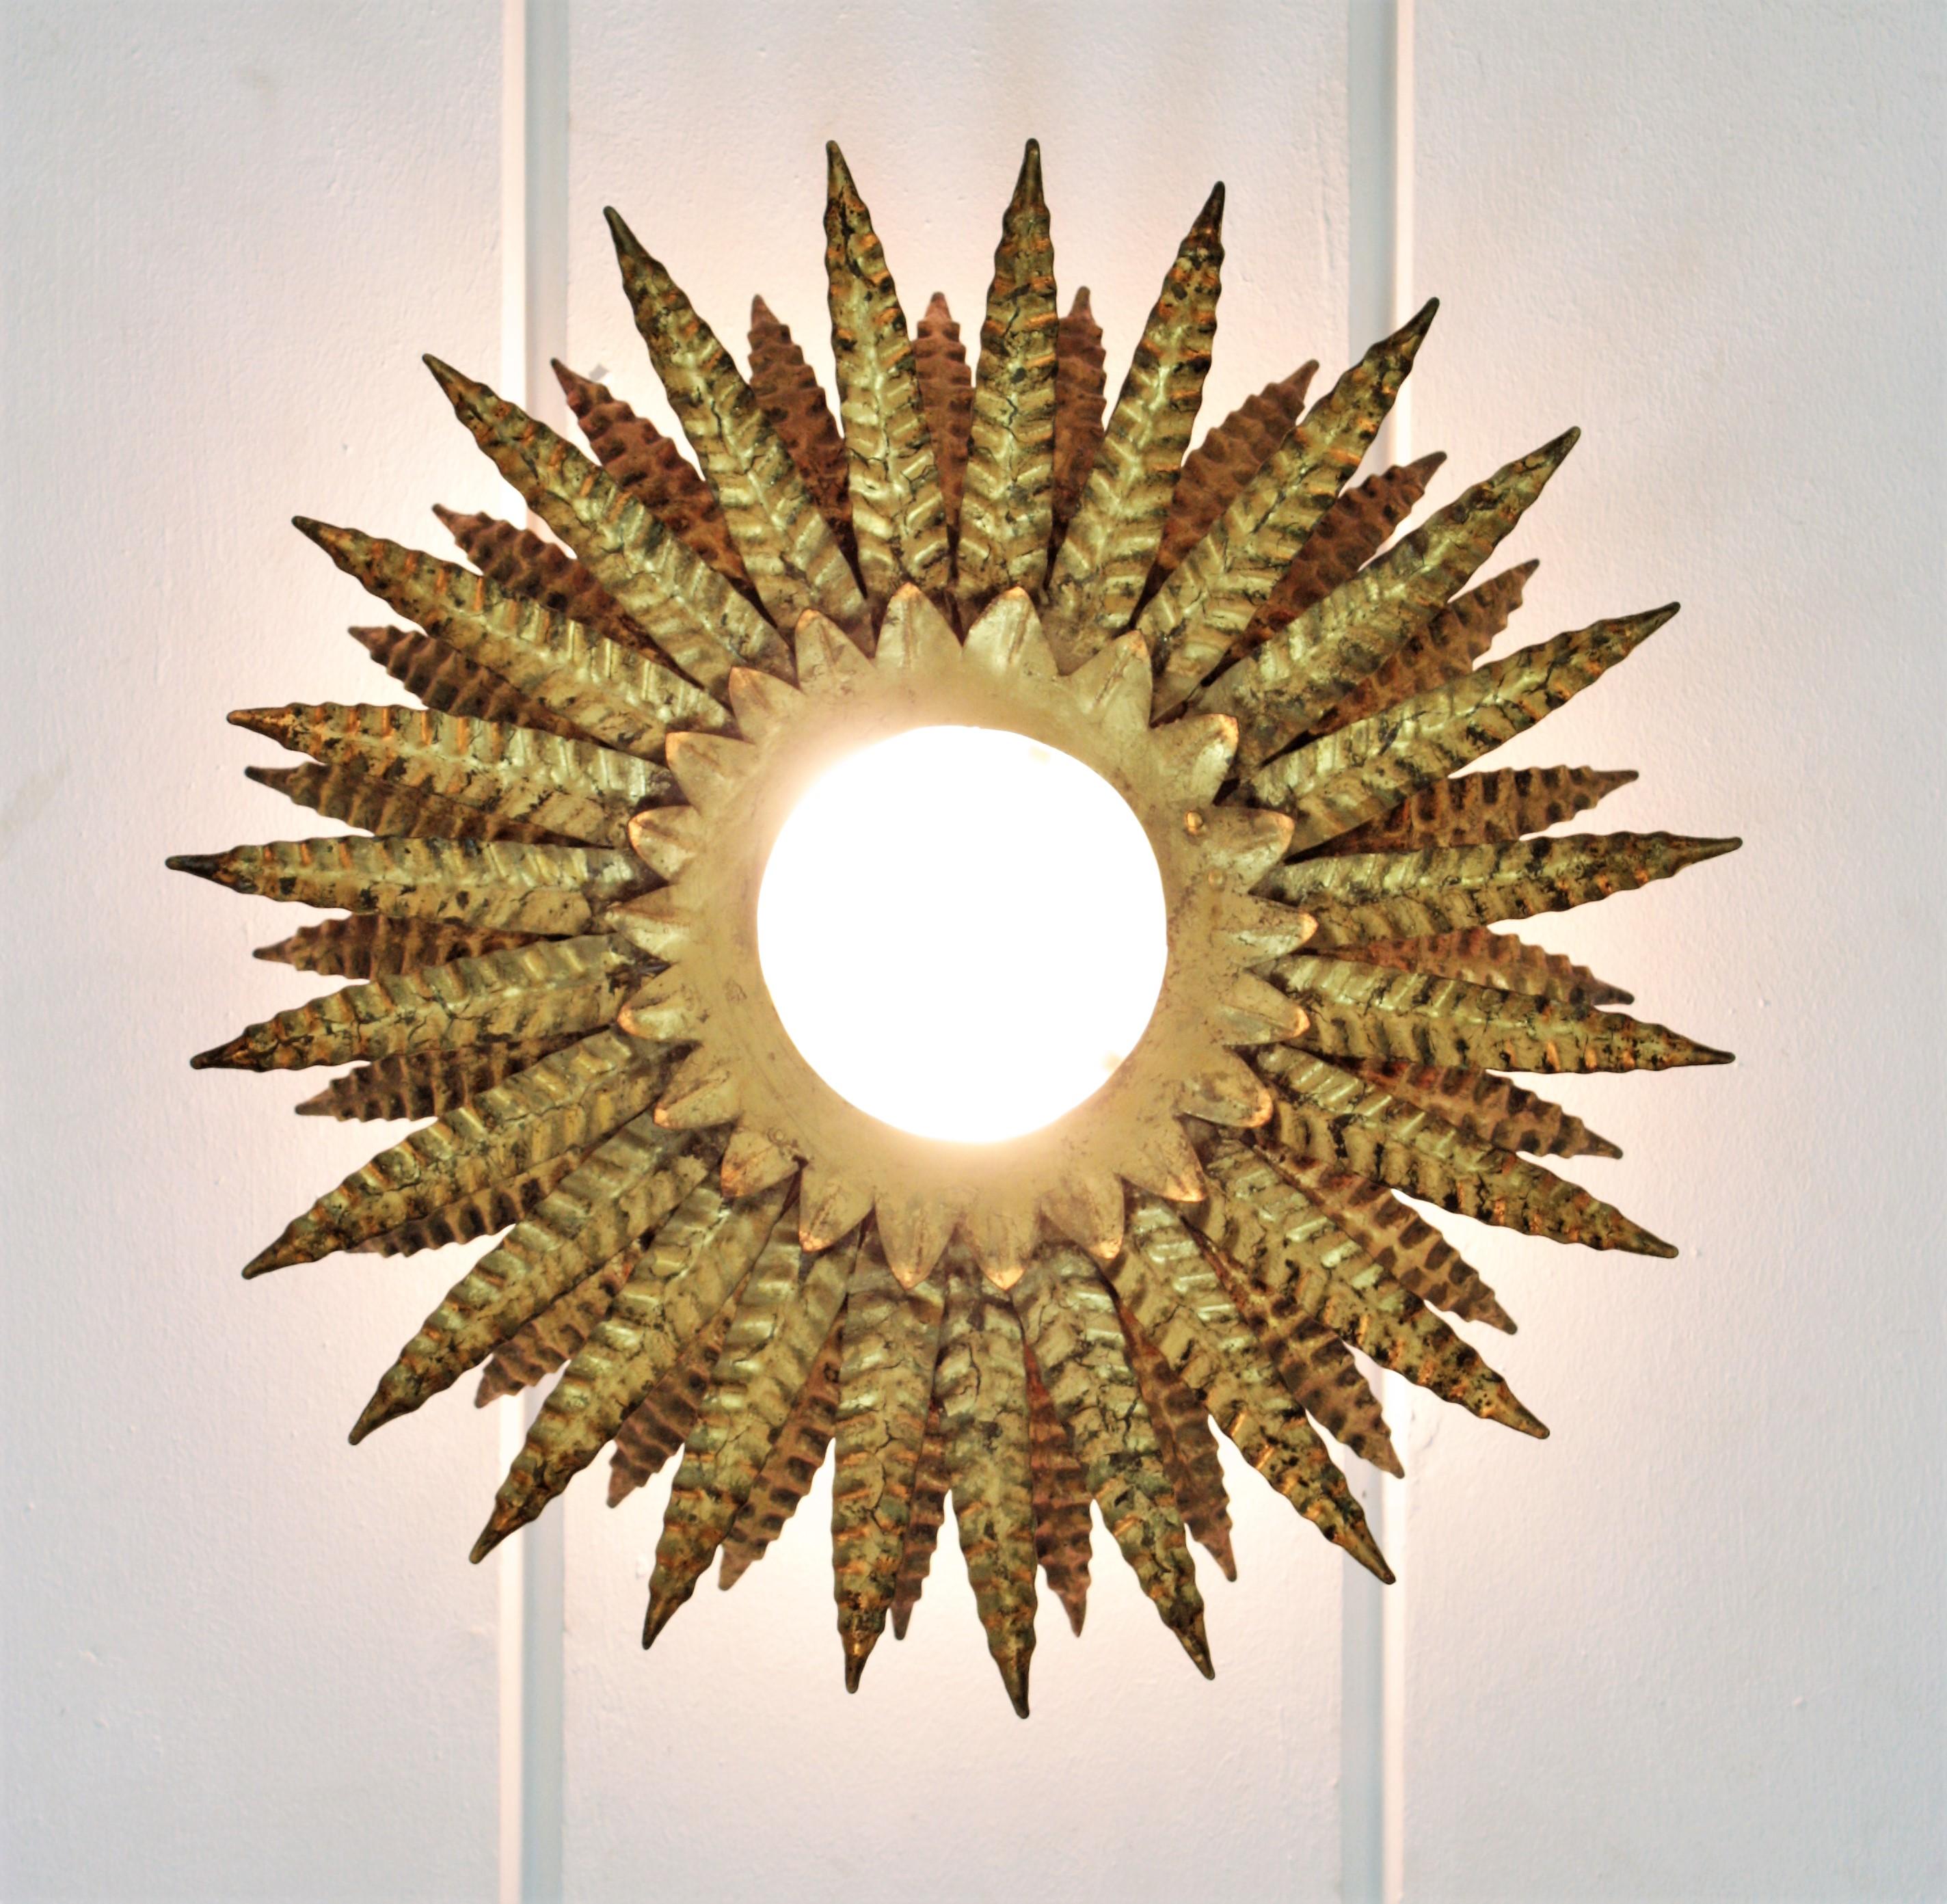 20th Century Sunburst Triple Layered Ceiling Light Fixture or Chandelier in Gilt Iron